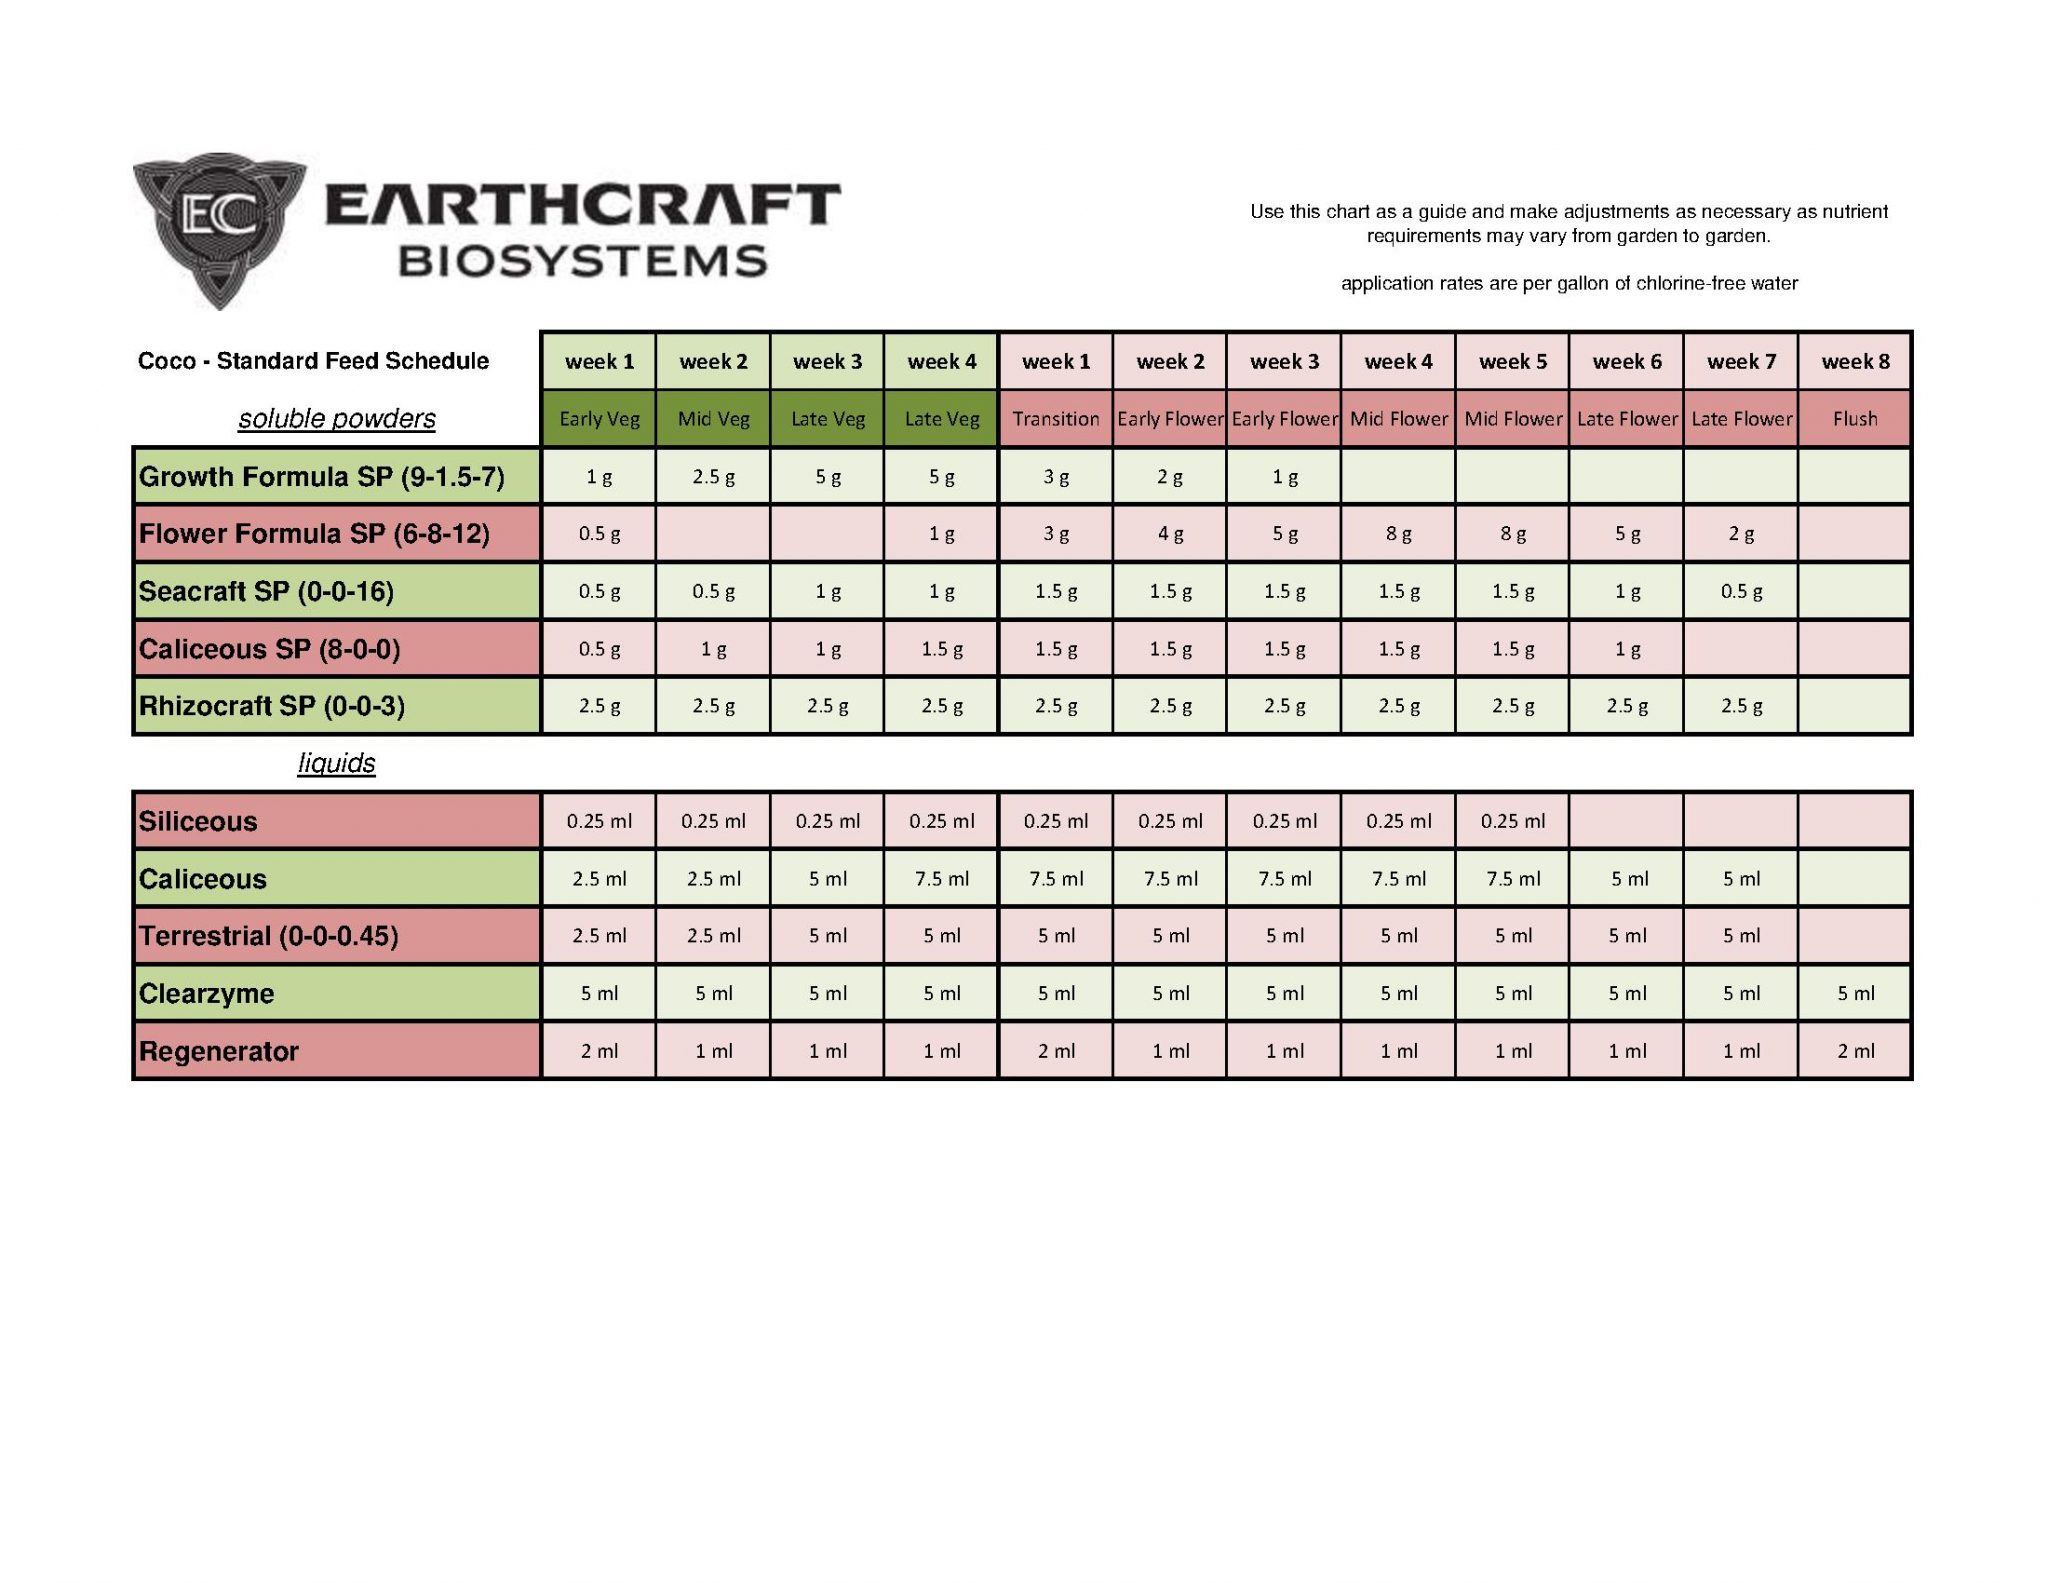 tinywow_Copy of Earthcraft Biosystems Feed Chart - Coco_7647420_1